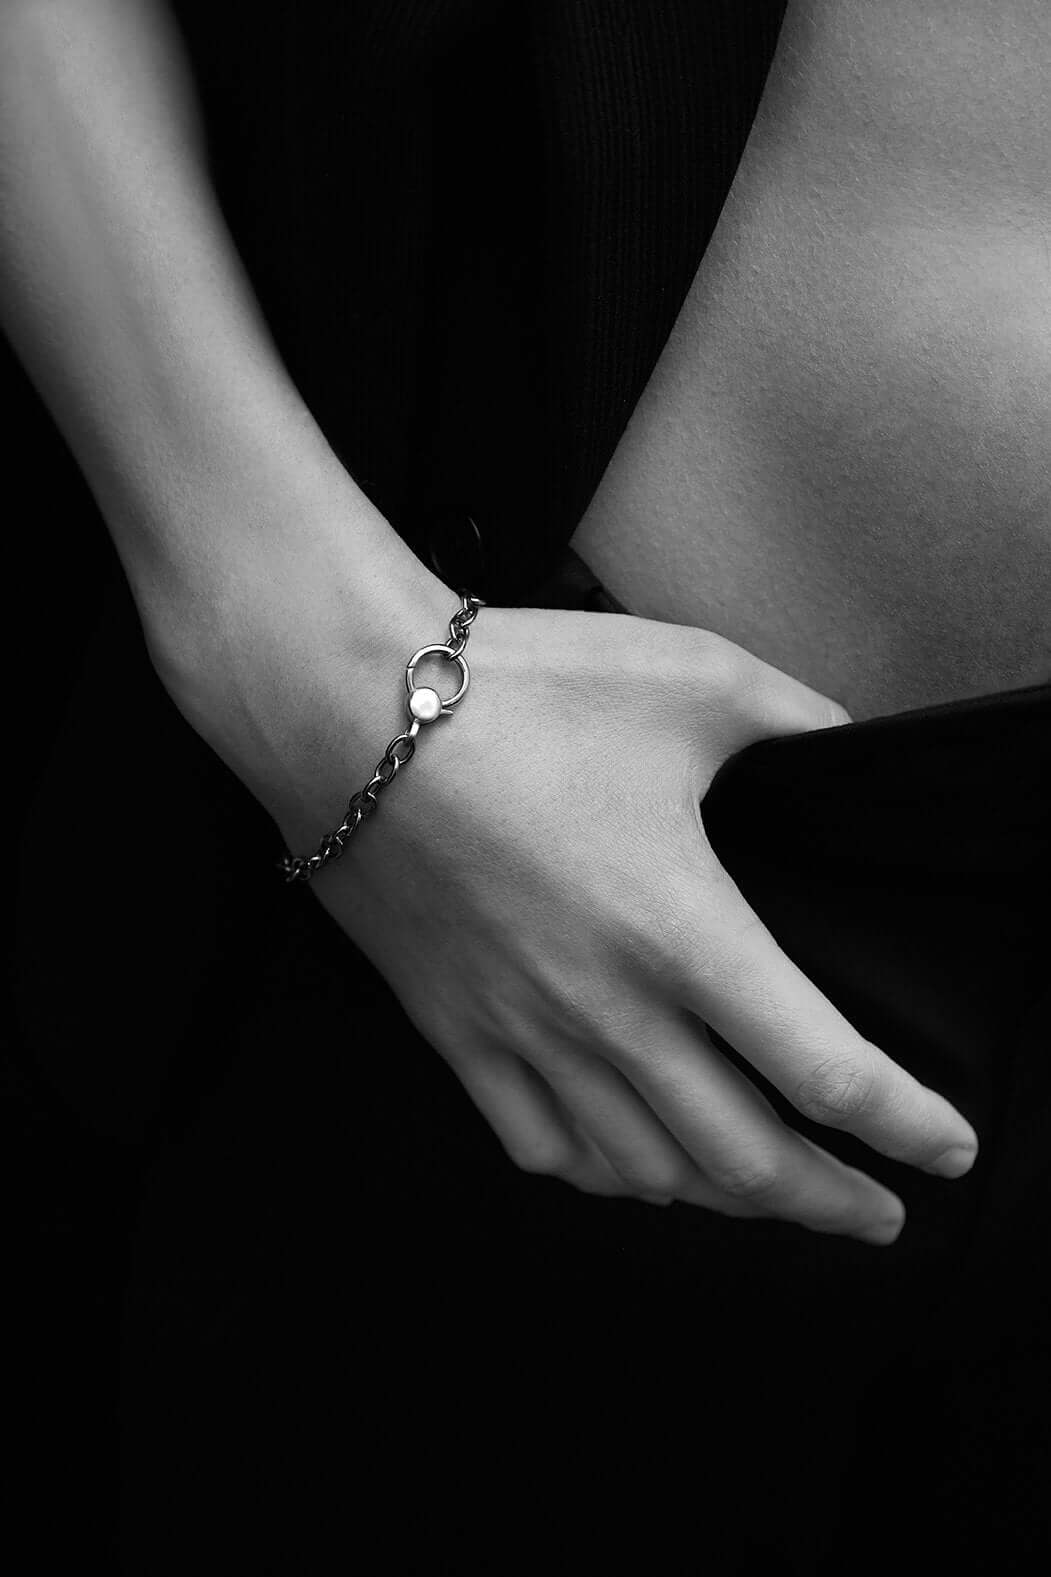 Black Gold Lock Chain Bracelet - Chains - Ileana Makri store